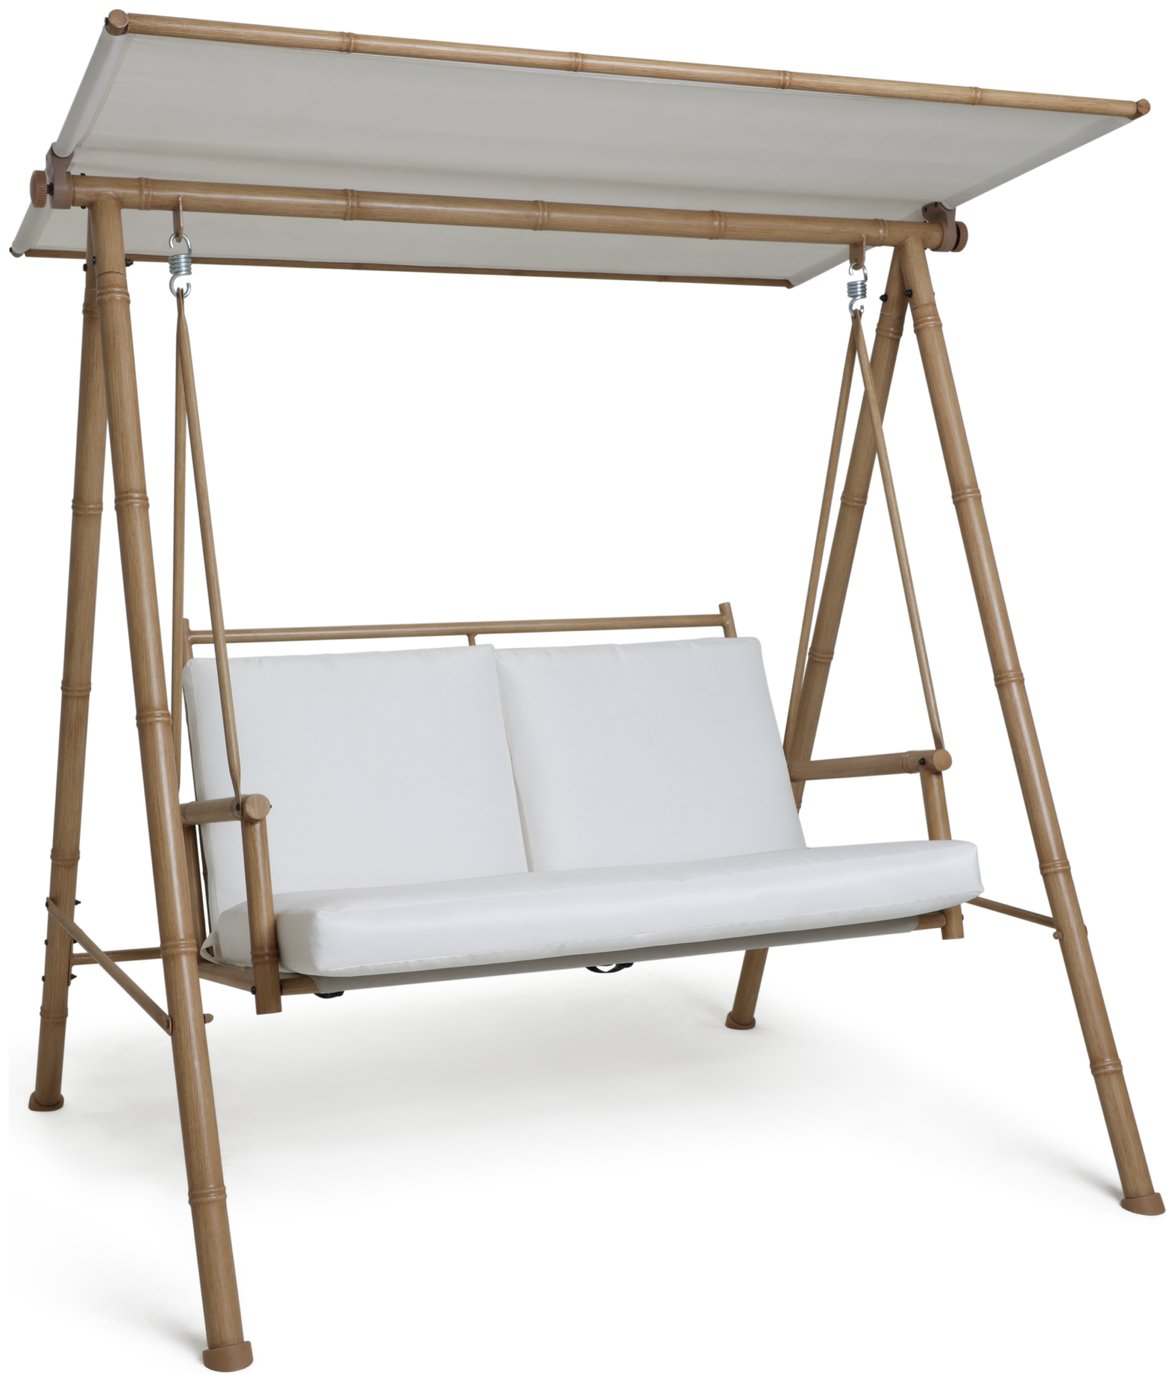 Argos Home 2 Seater Metal Garden Swing Chair - Natural